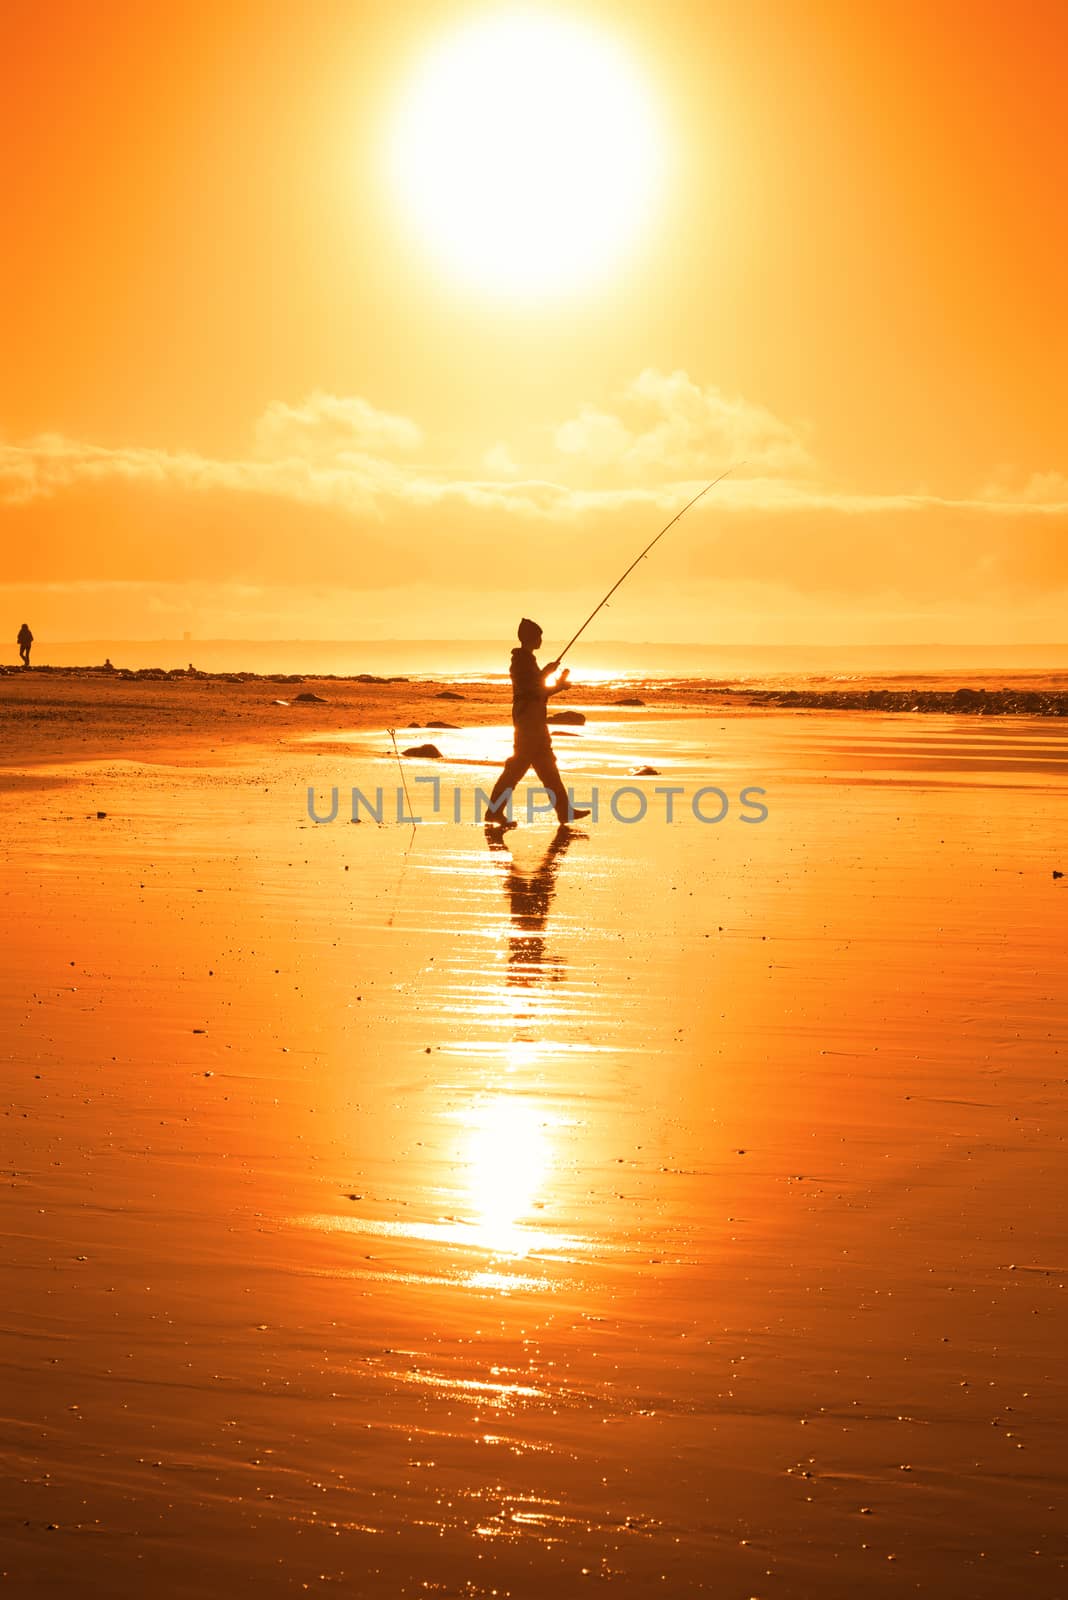 lone fisherman fishing on the beach in Ballybunion county Kerry Ireland